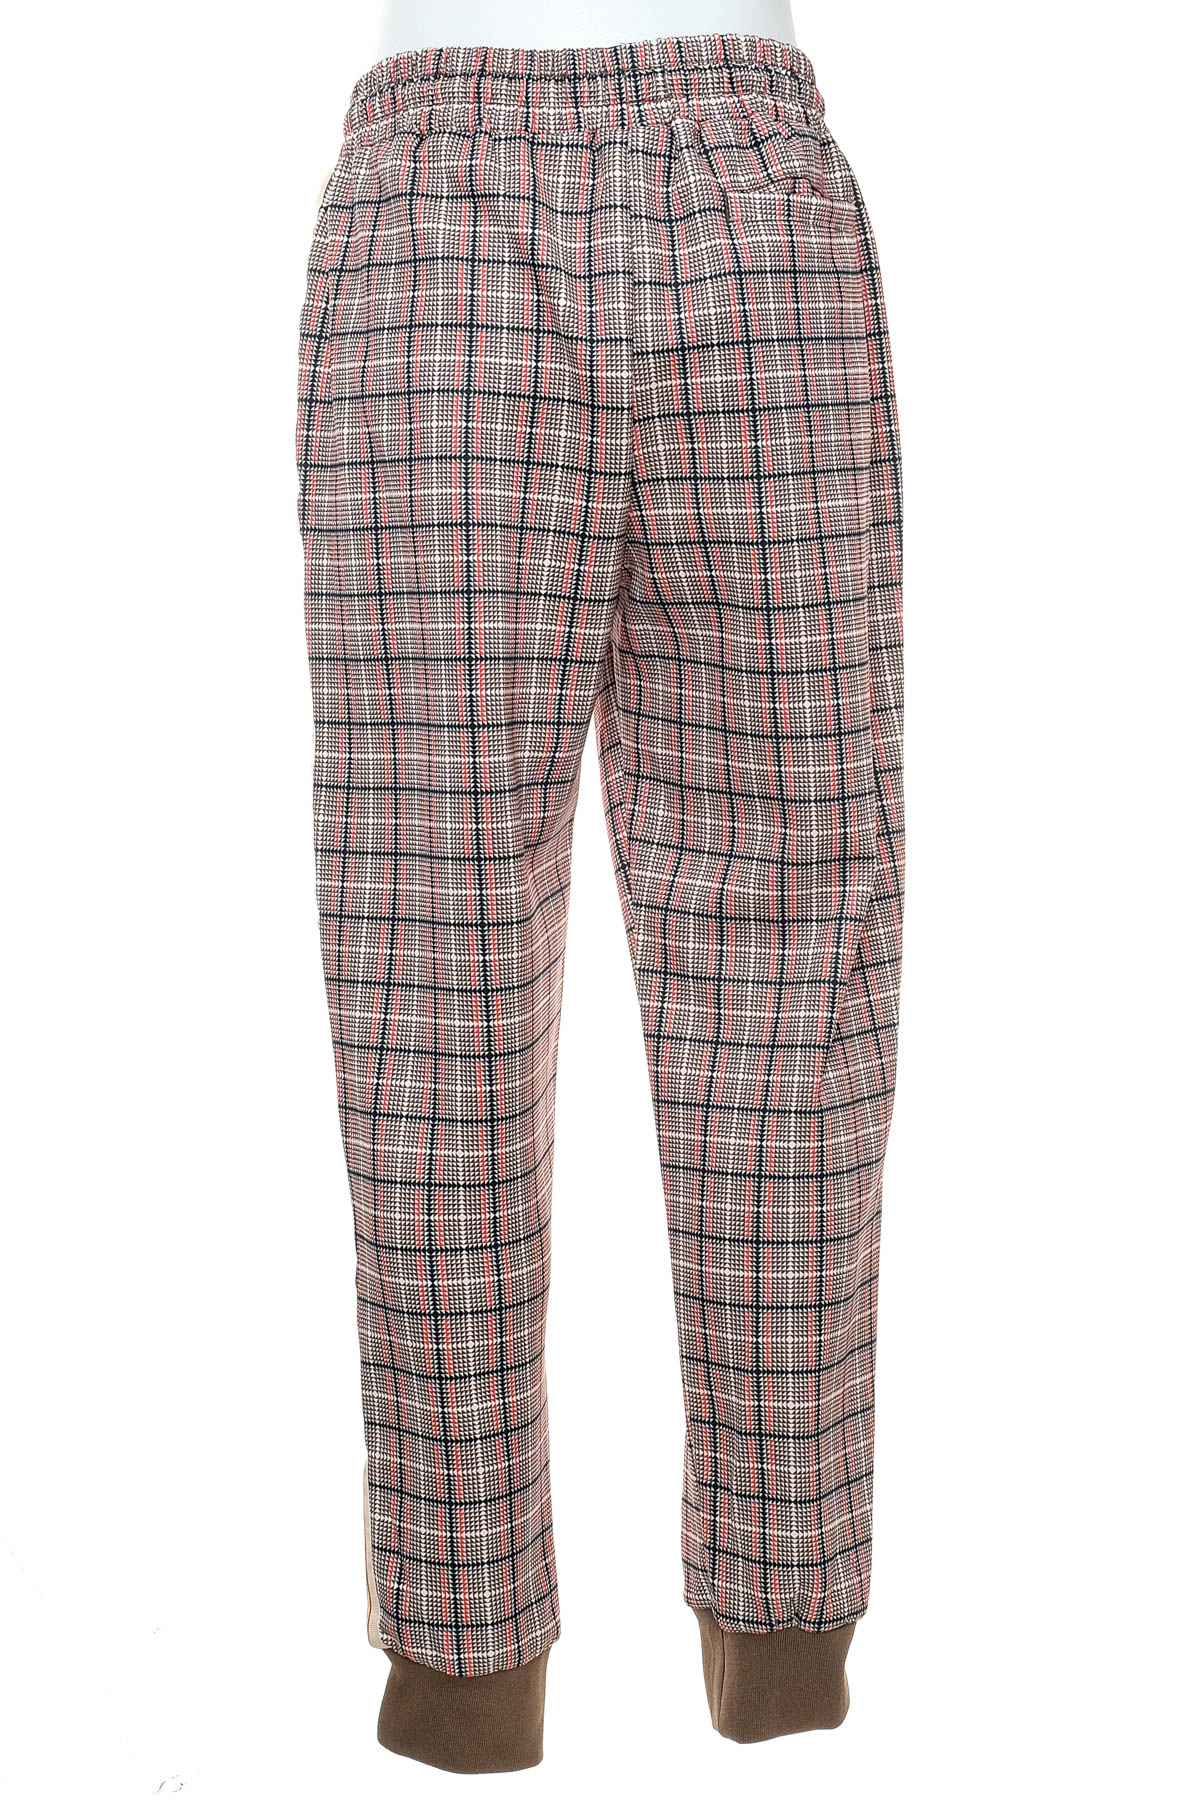 Pantalon pentru bărbați - JianWang - 1